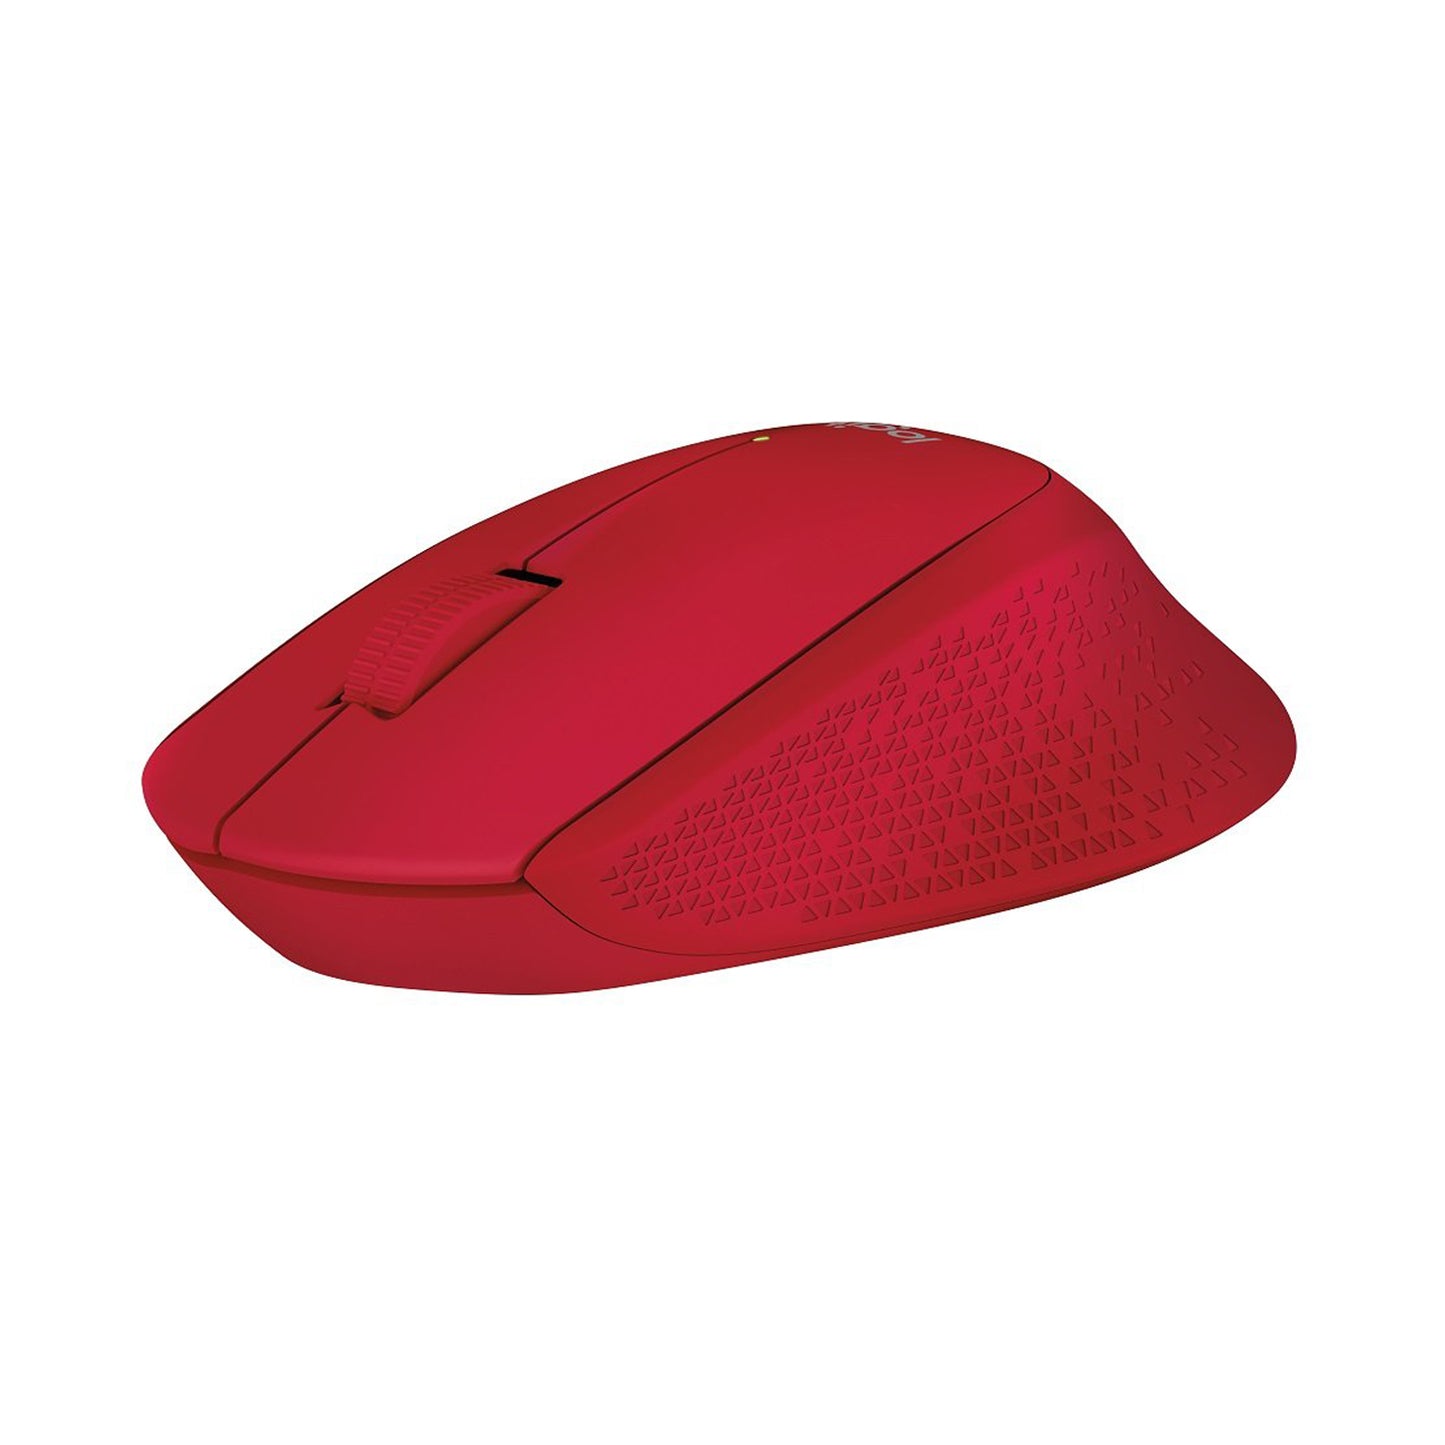 Mouse Inalambrico Logitech Rojo M280 - Crazygames